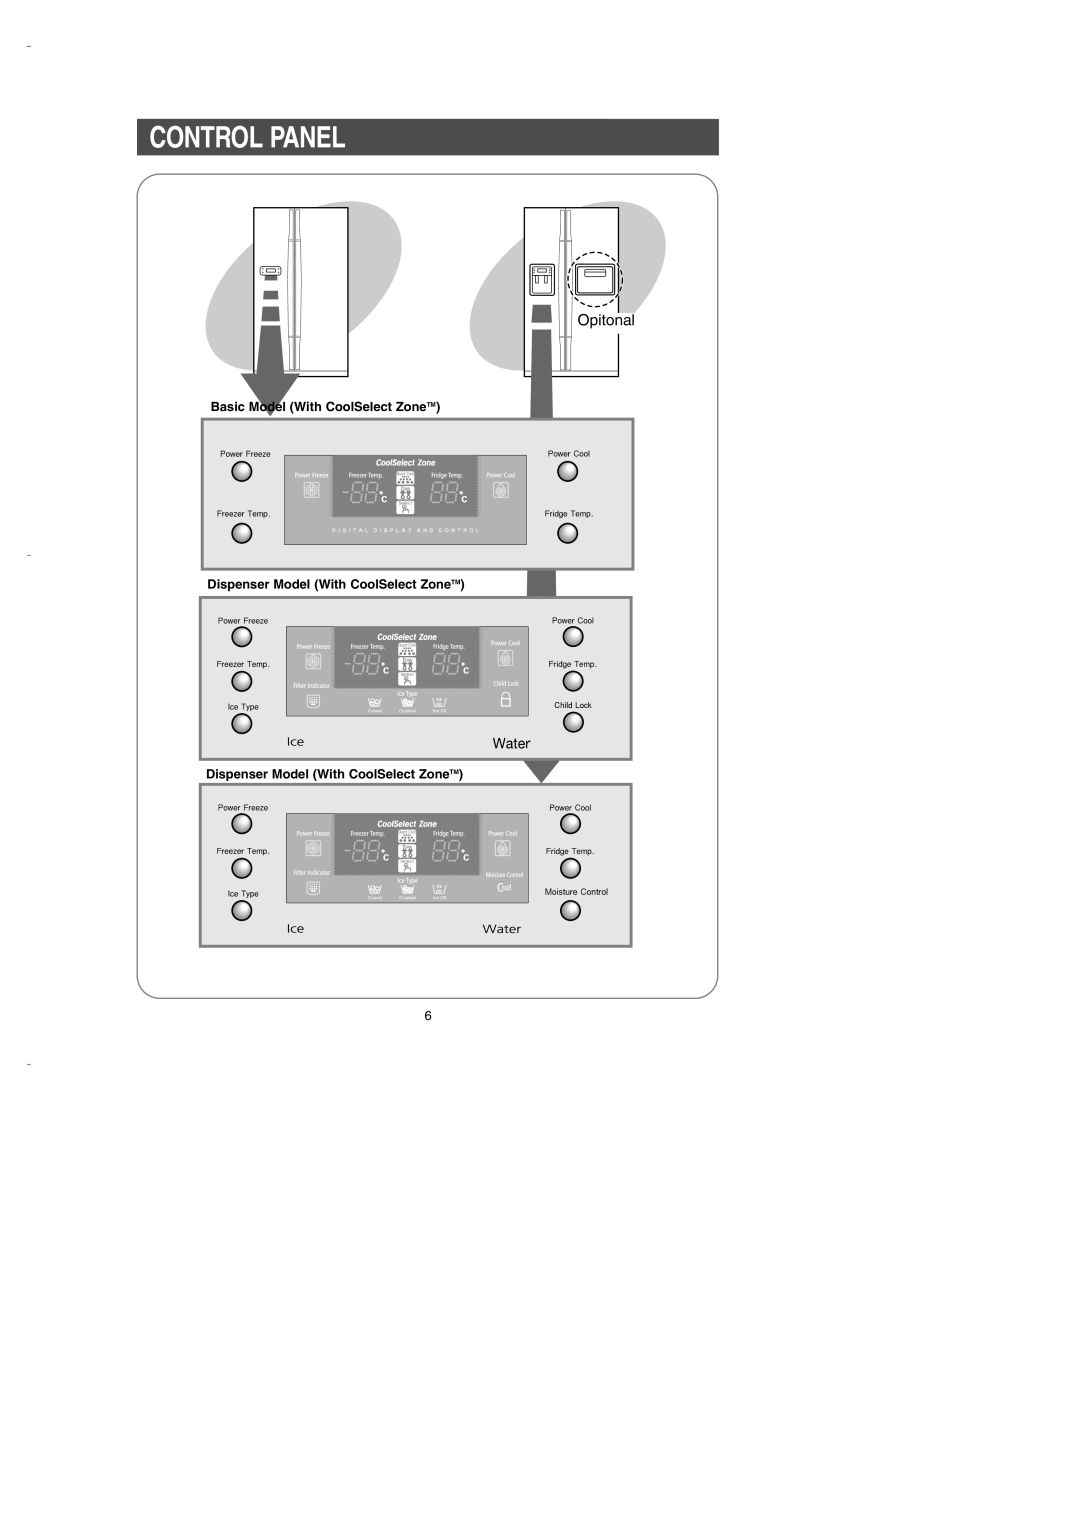 Samsung DA99-00275B Opitonal, Basic Model With CoolSelect ZoneTM, Dispenser Model With CoolSelect ZoneTM, Control Panel 